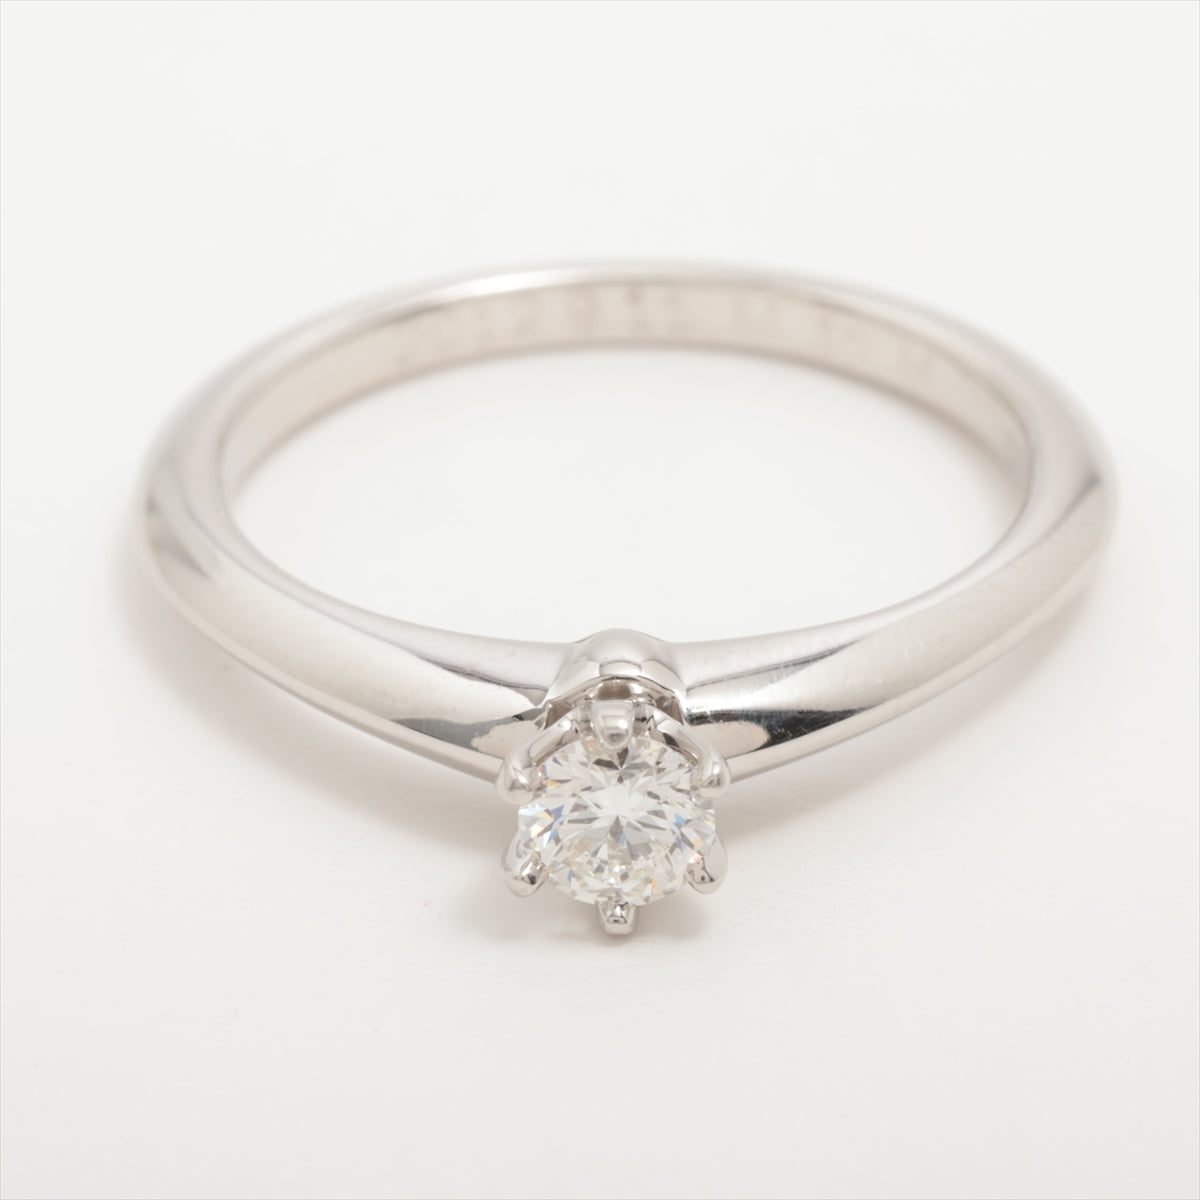 Tiffany Solitaire Diamond Ring Pt950 3.7g 0.18